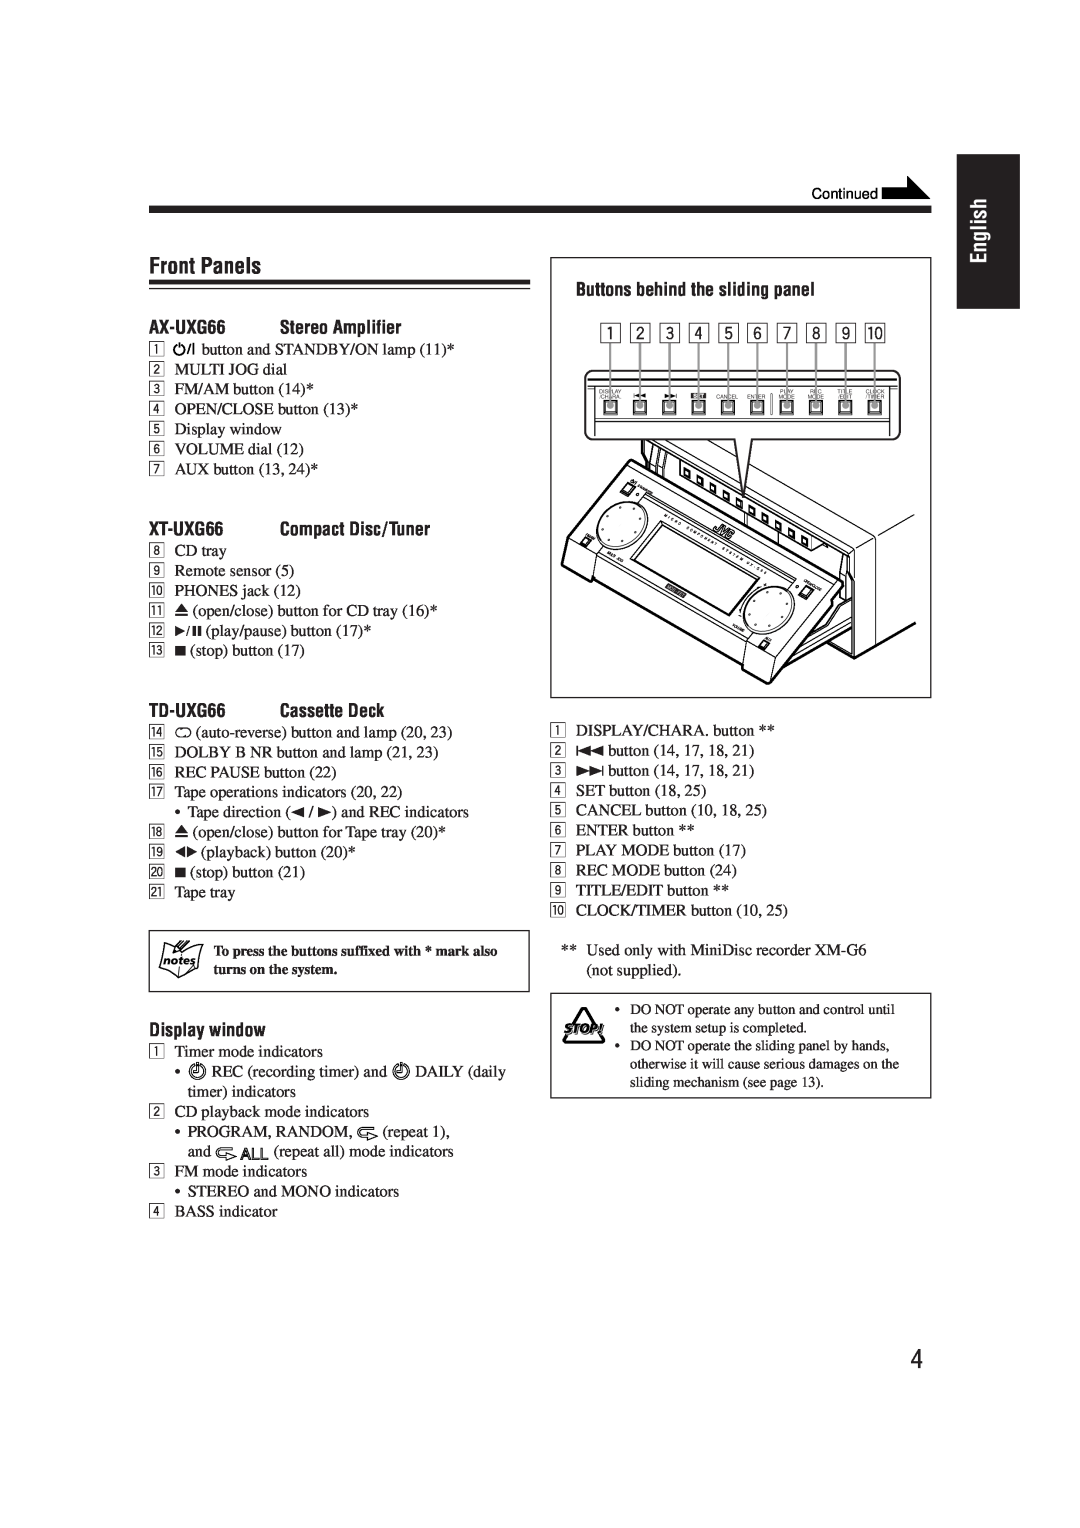 JVC SP-UXG66 Front Panels, English, AX-UXG66, Stereo Amplifier, XT-UXG66, Compact Disc/Tuner, TD-UXG66, Display window 